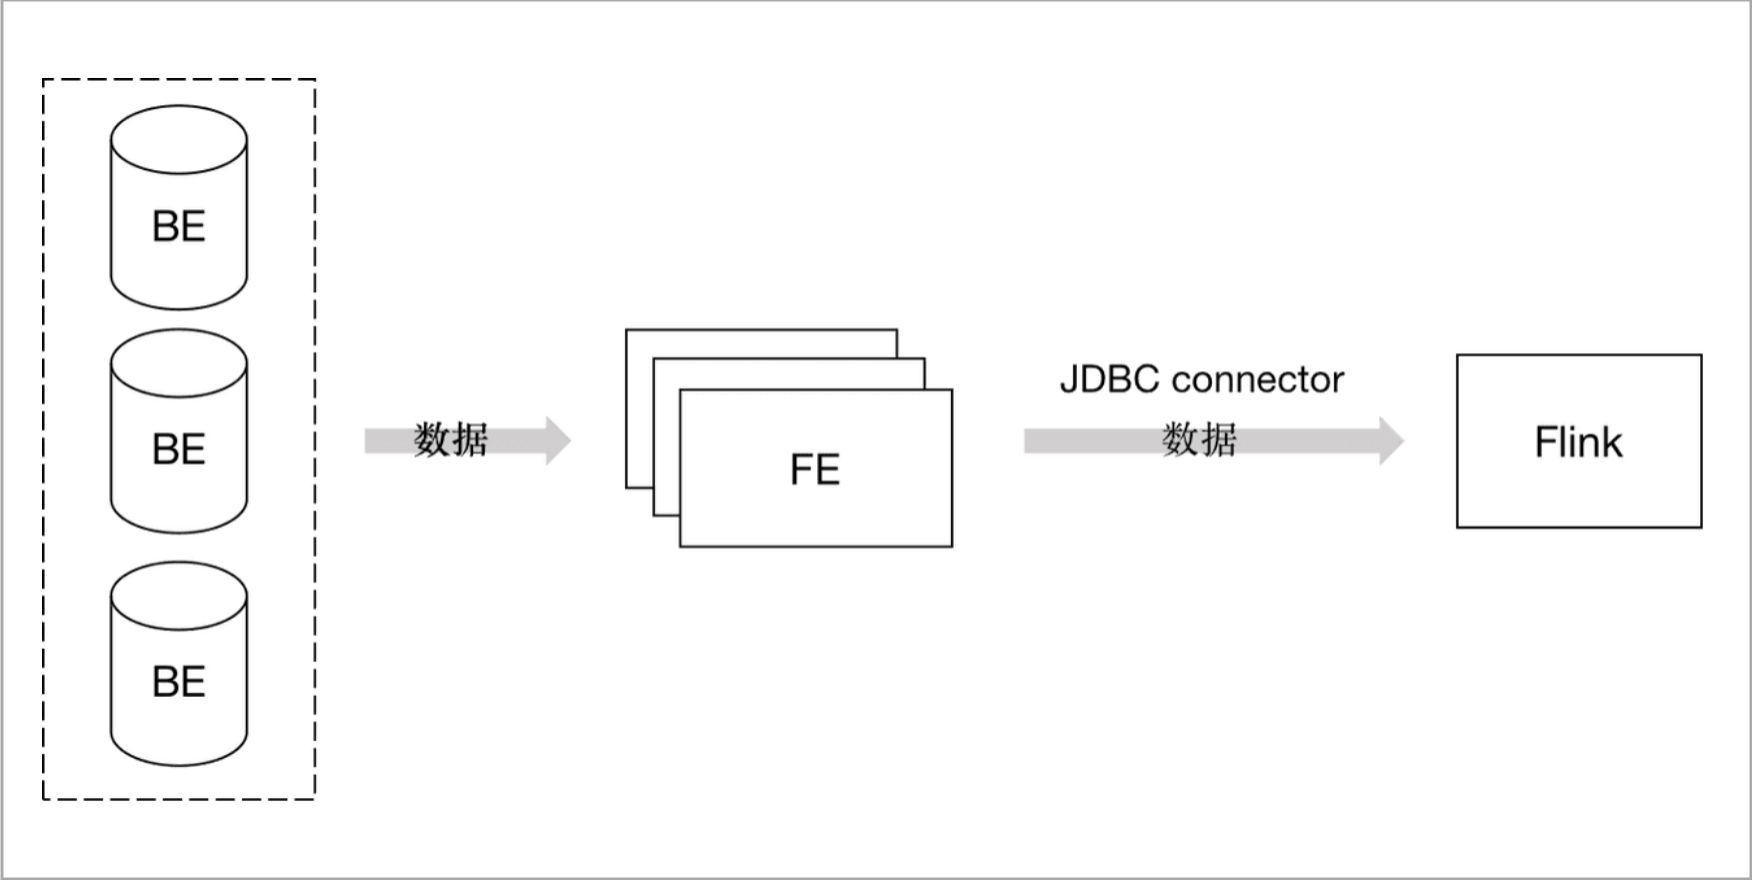 Unload data - JDBC Connector